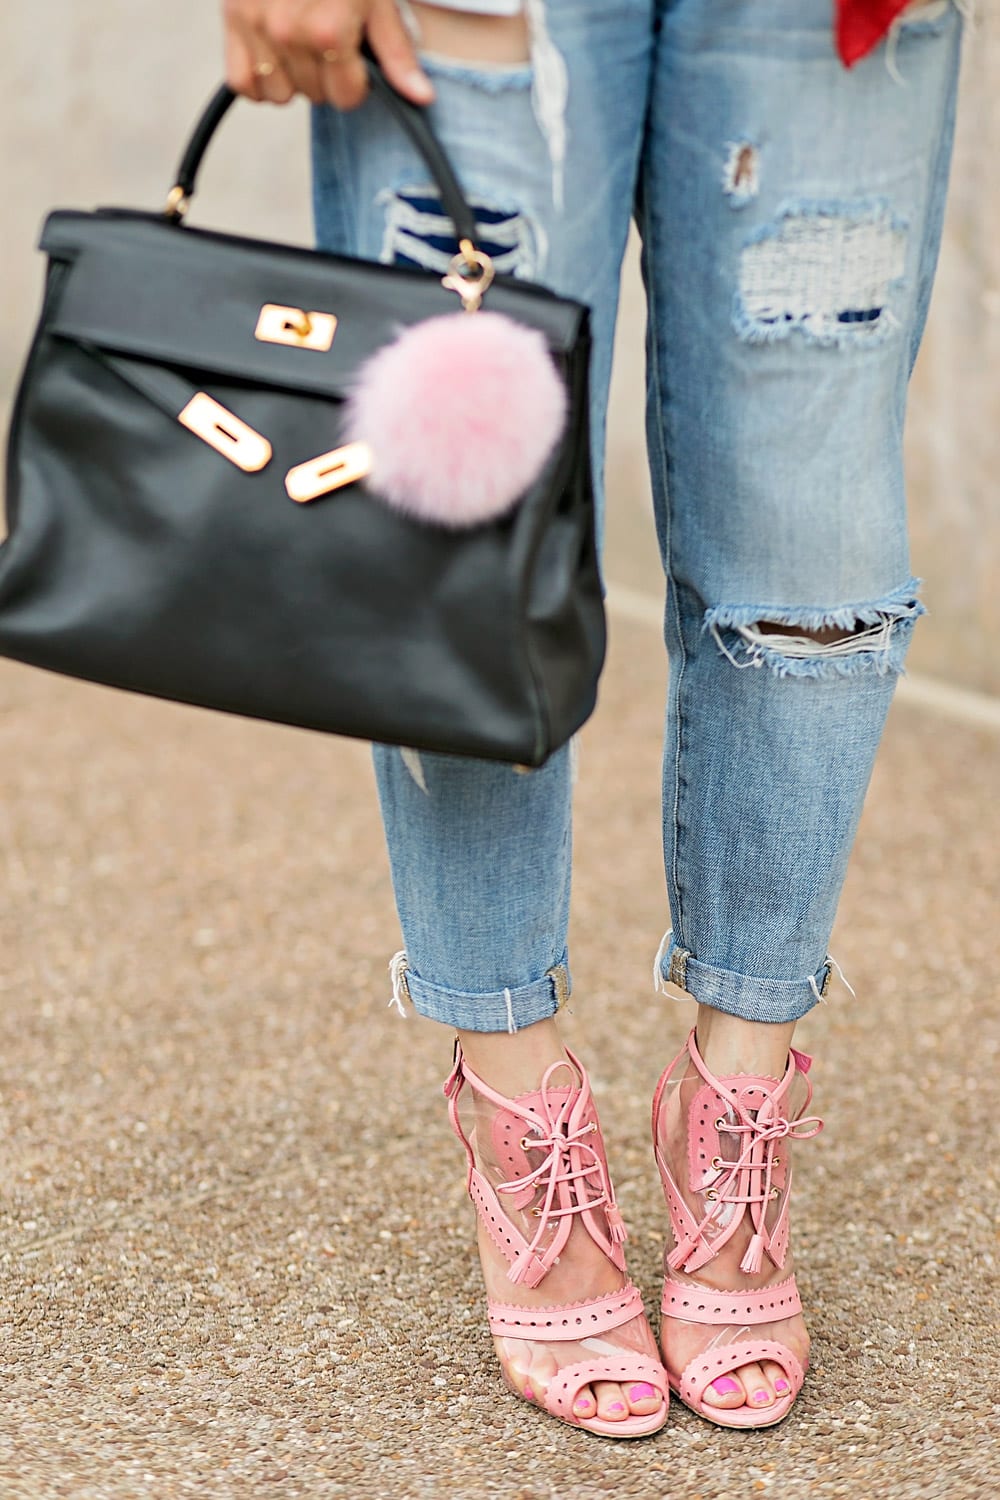 boyfriend jeans with black hermes kelly bag and oscar de la renta pink oxford heels